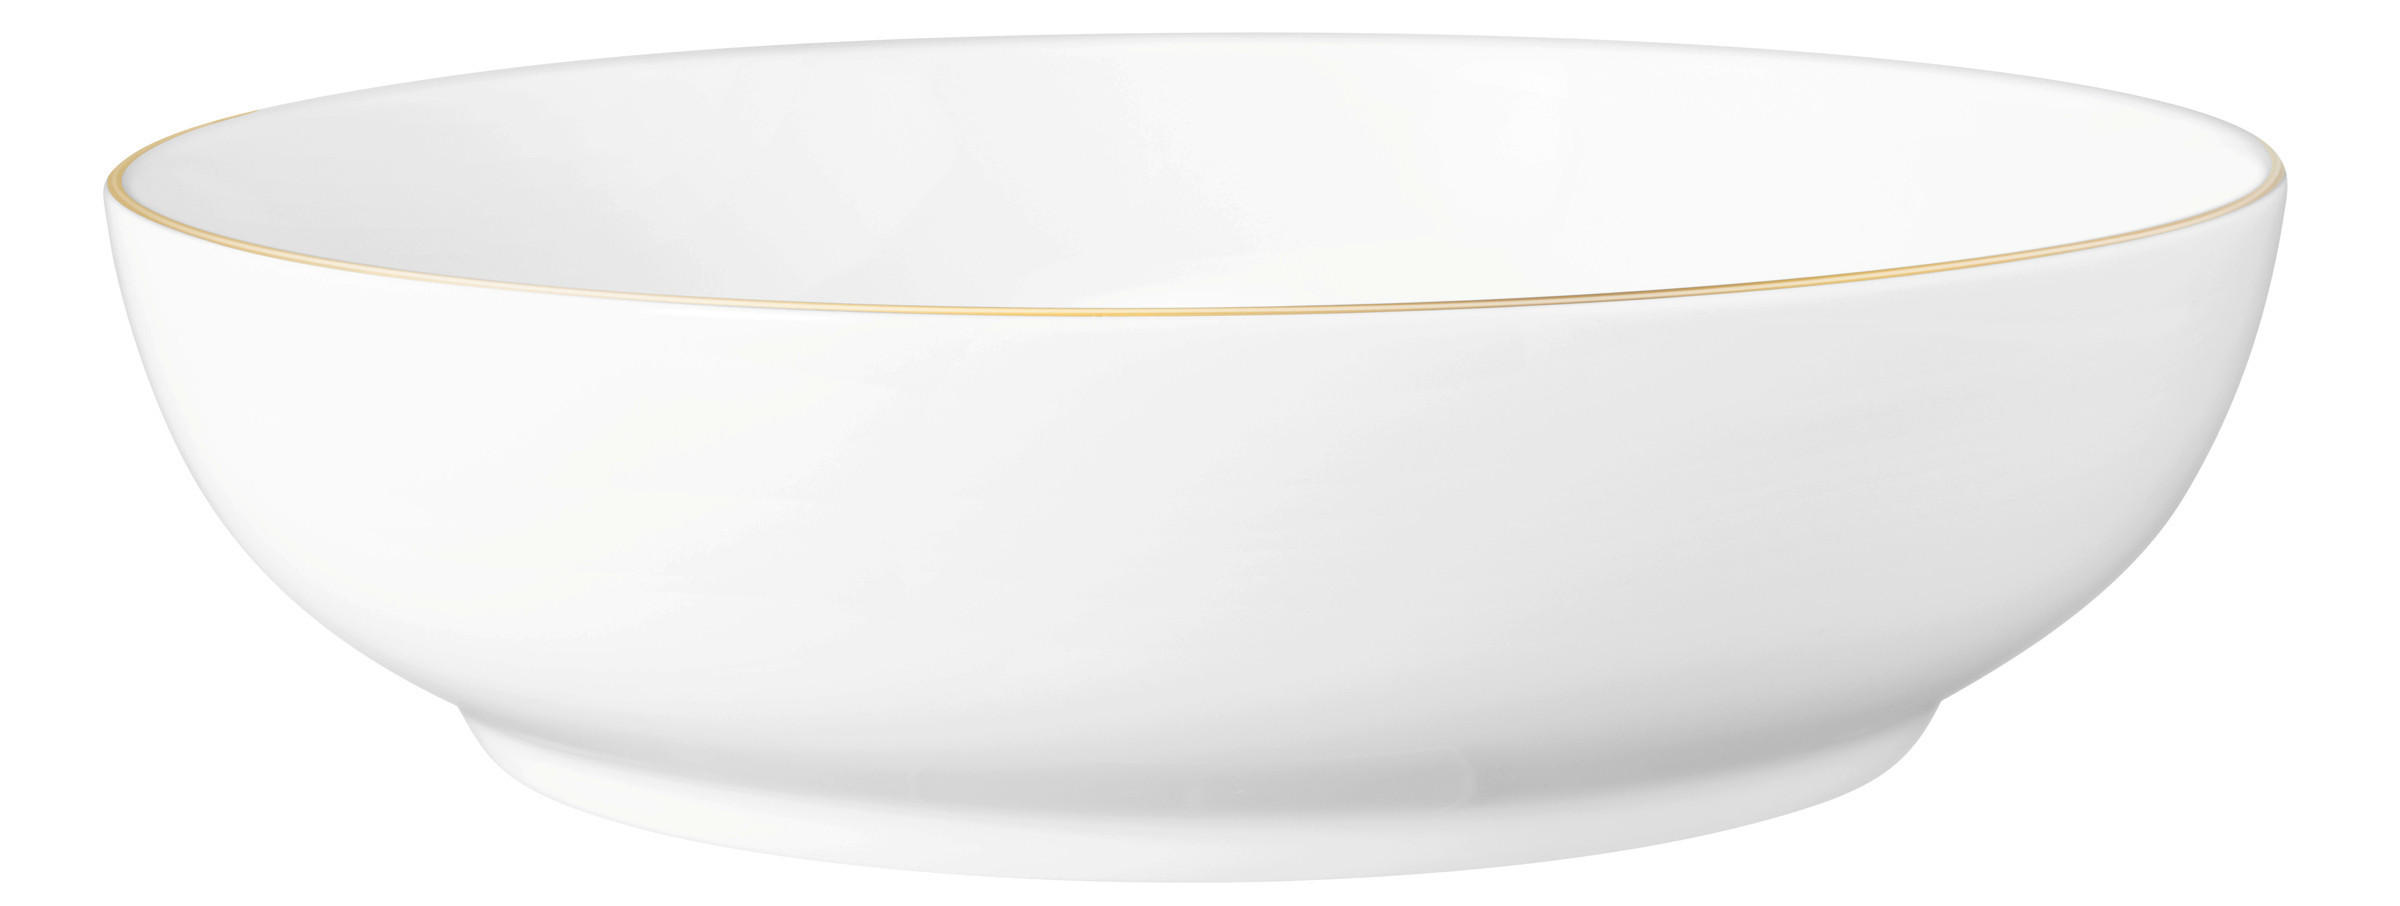 SCHALE Keramik Porzellan  - Goldfarben/Weiß, Basics, Keramik (25cm) - Seltmann Weiden